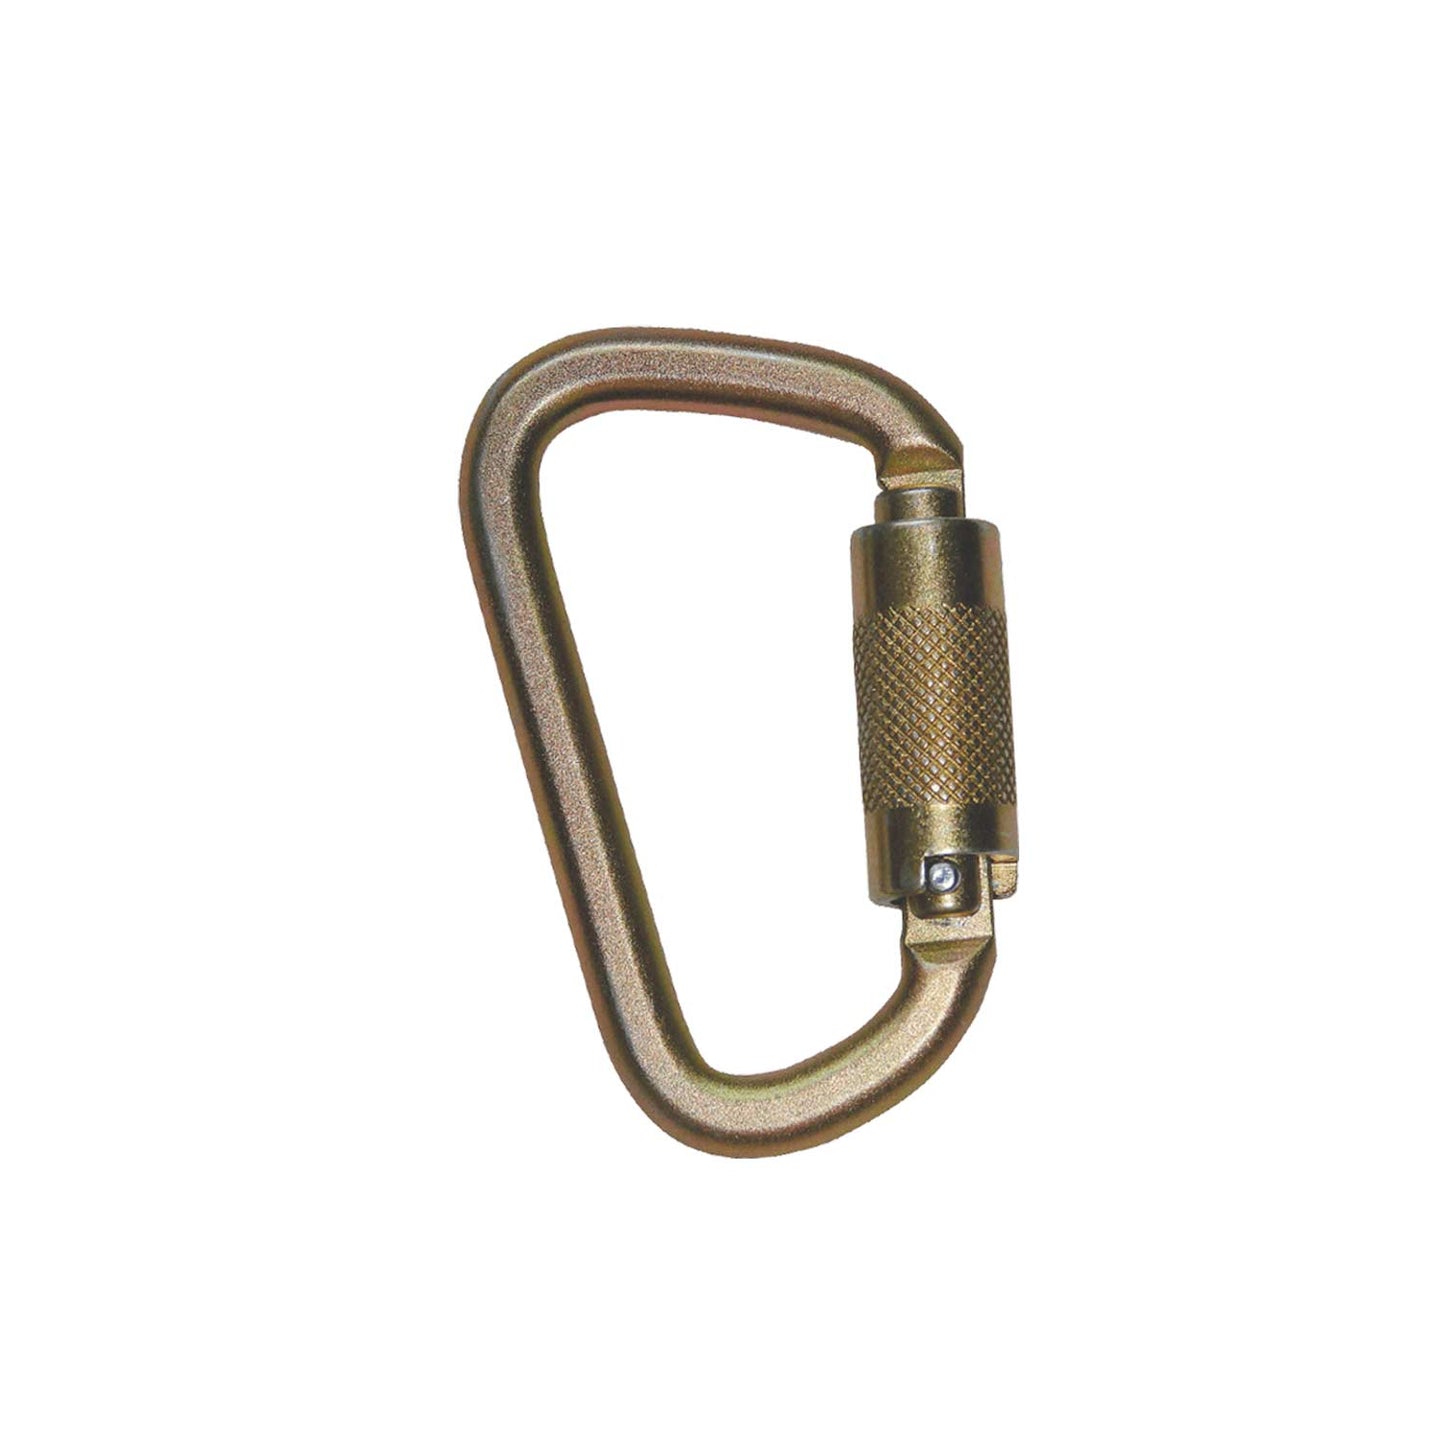 Falltech Small Alloy Steel Self-Closing Carabiner | 7/8" Open Gate Capacity | 8445